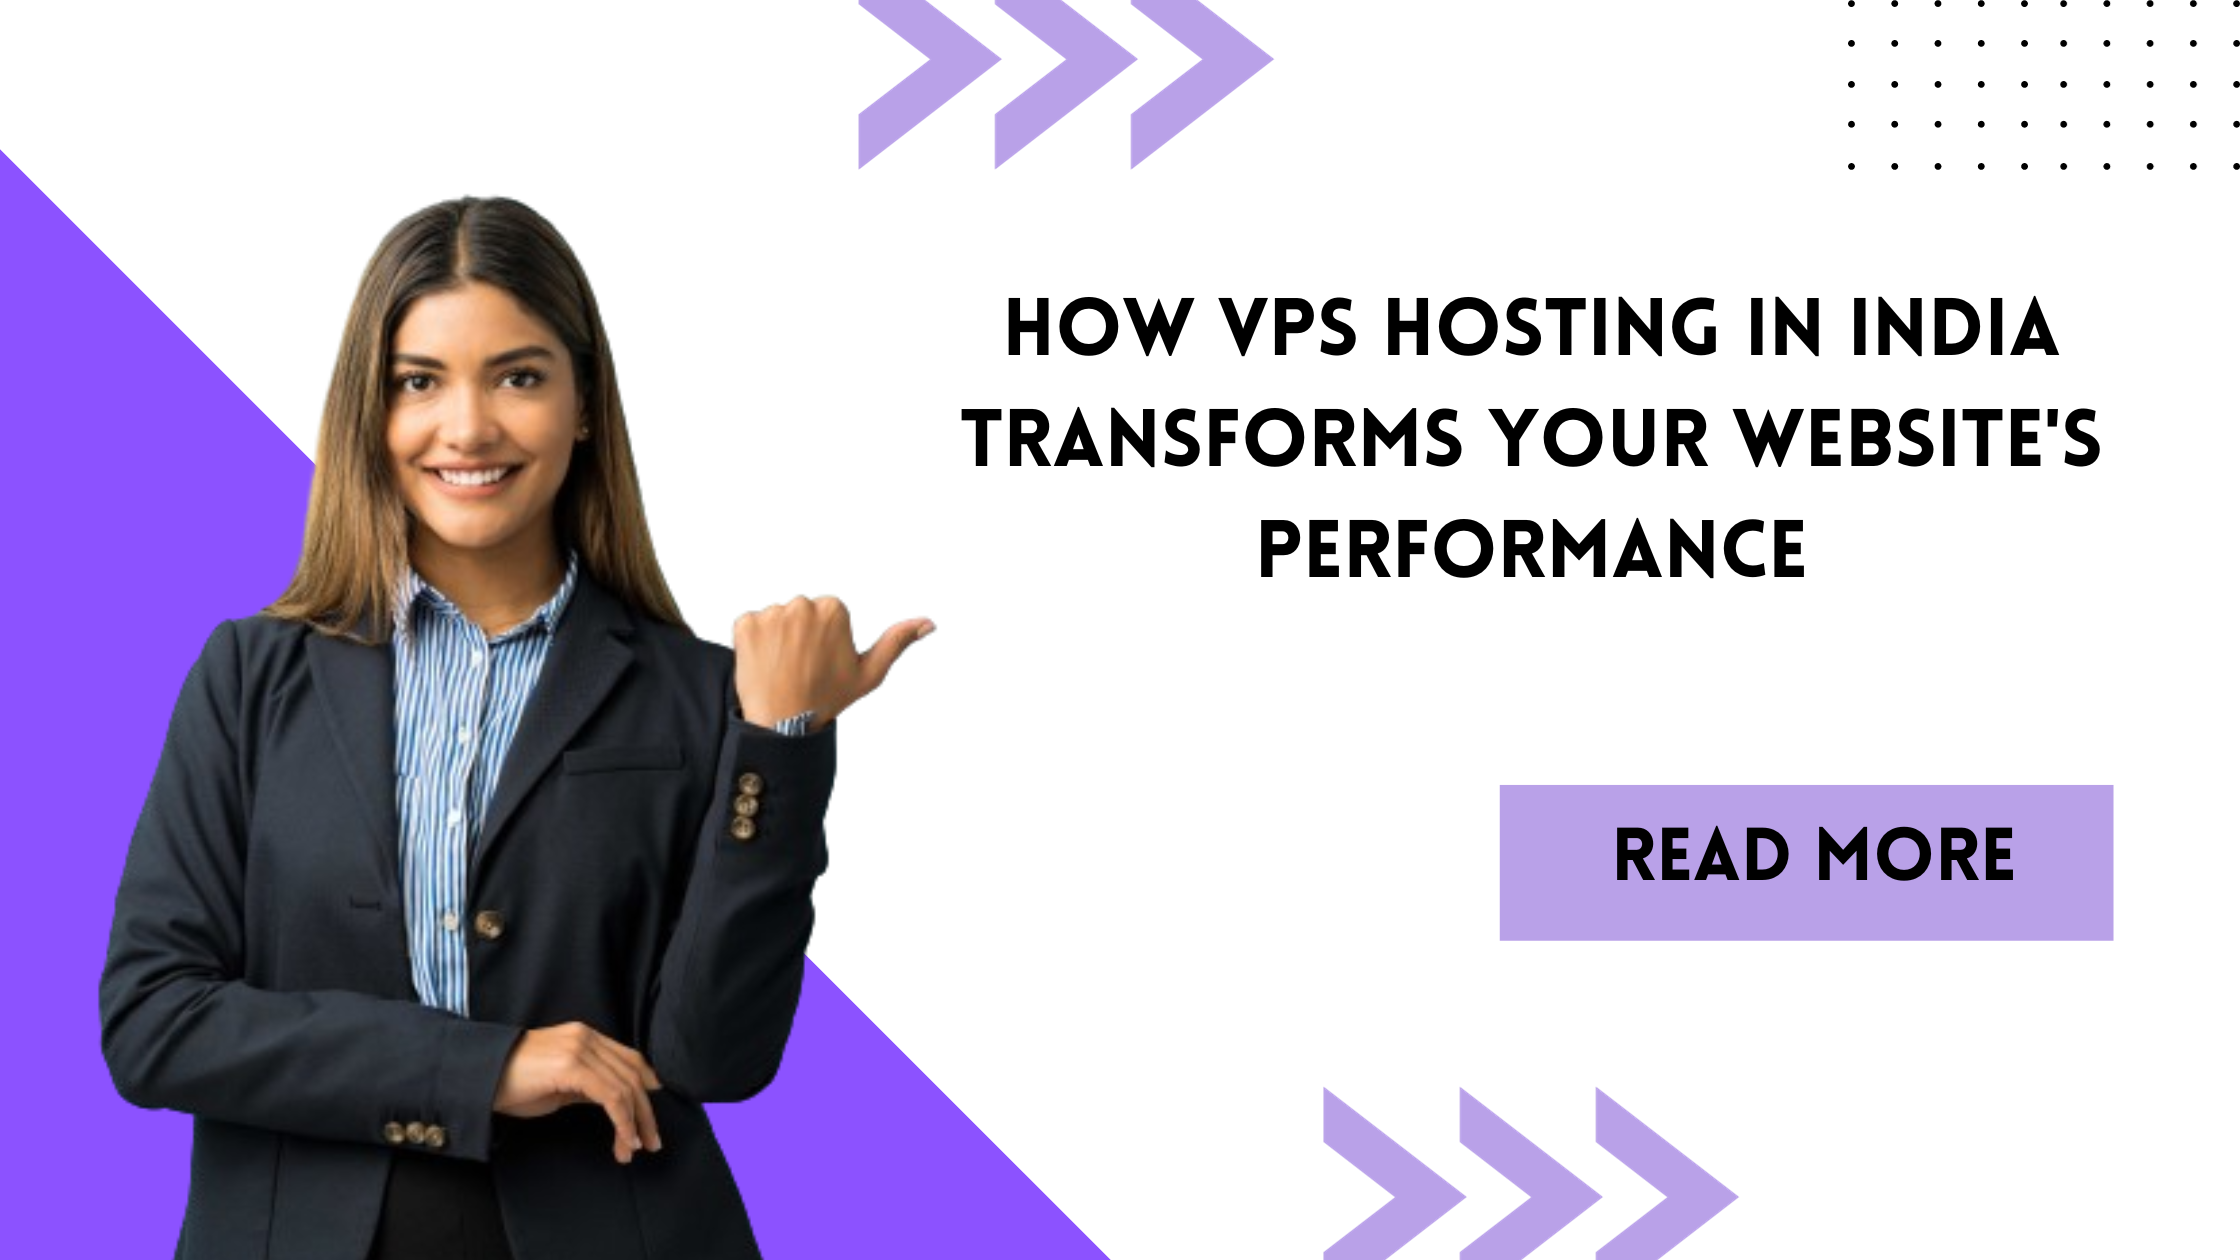 VPS hosting in India